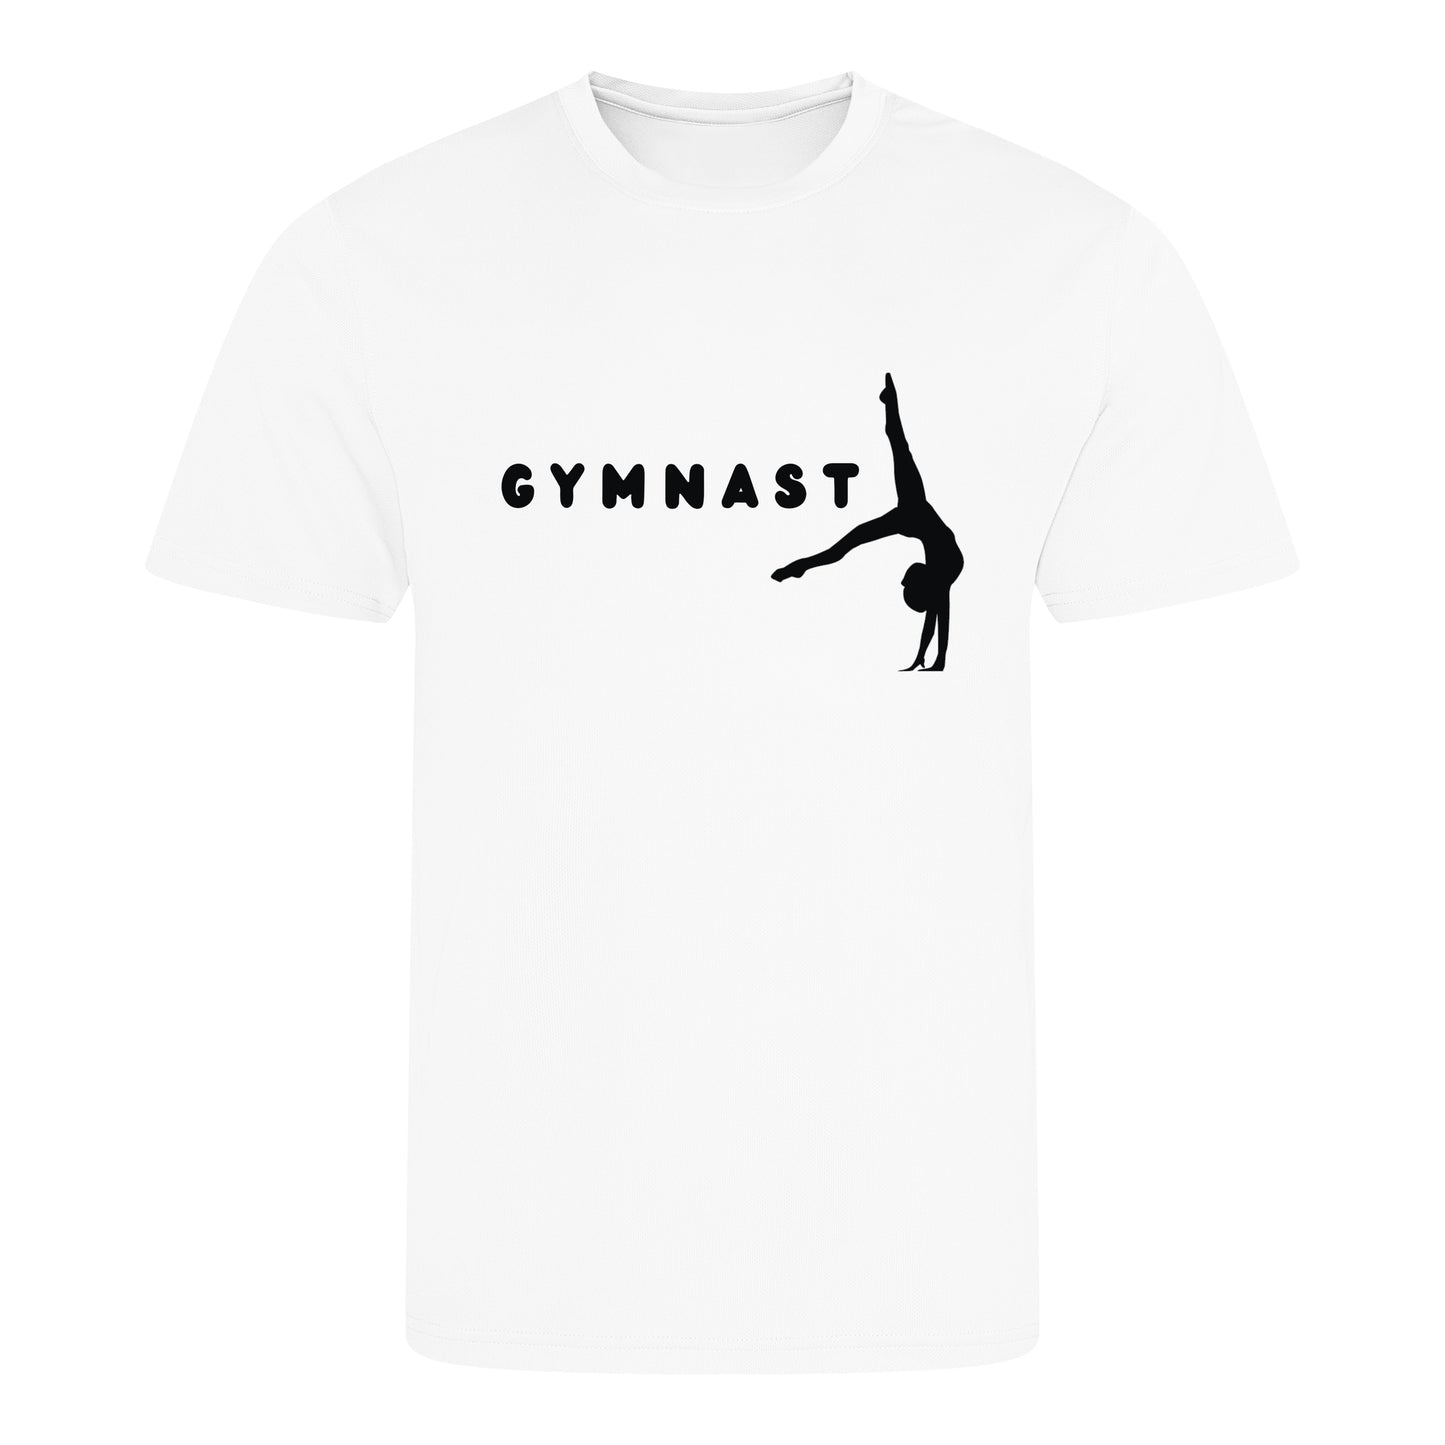 Gymnast T-Shirt 2 (JC001B/01/01)